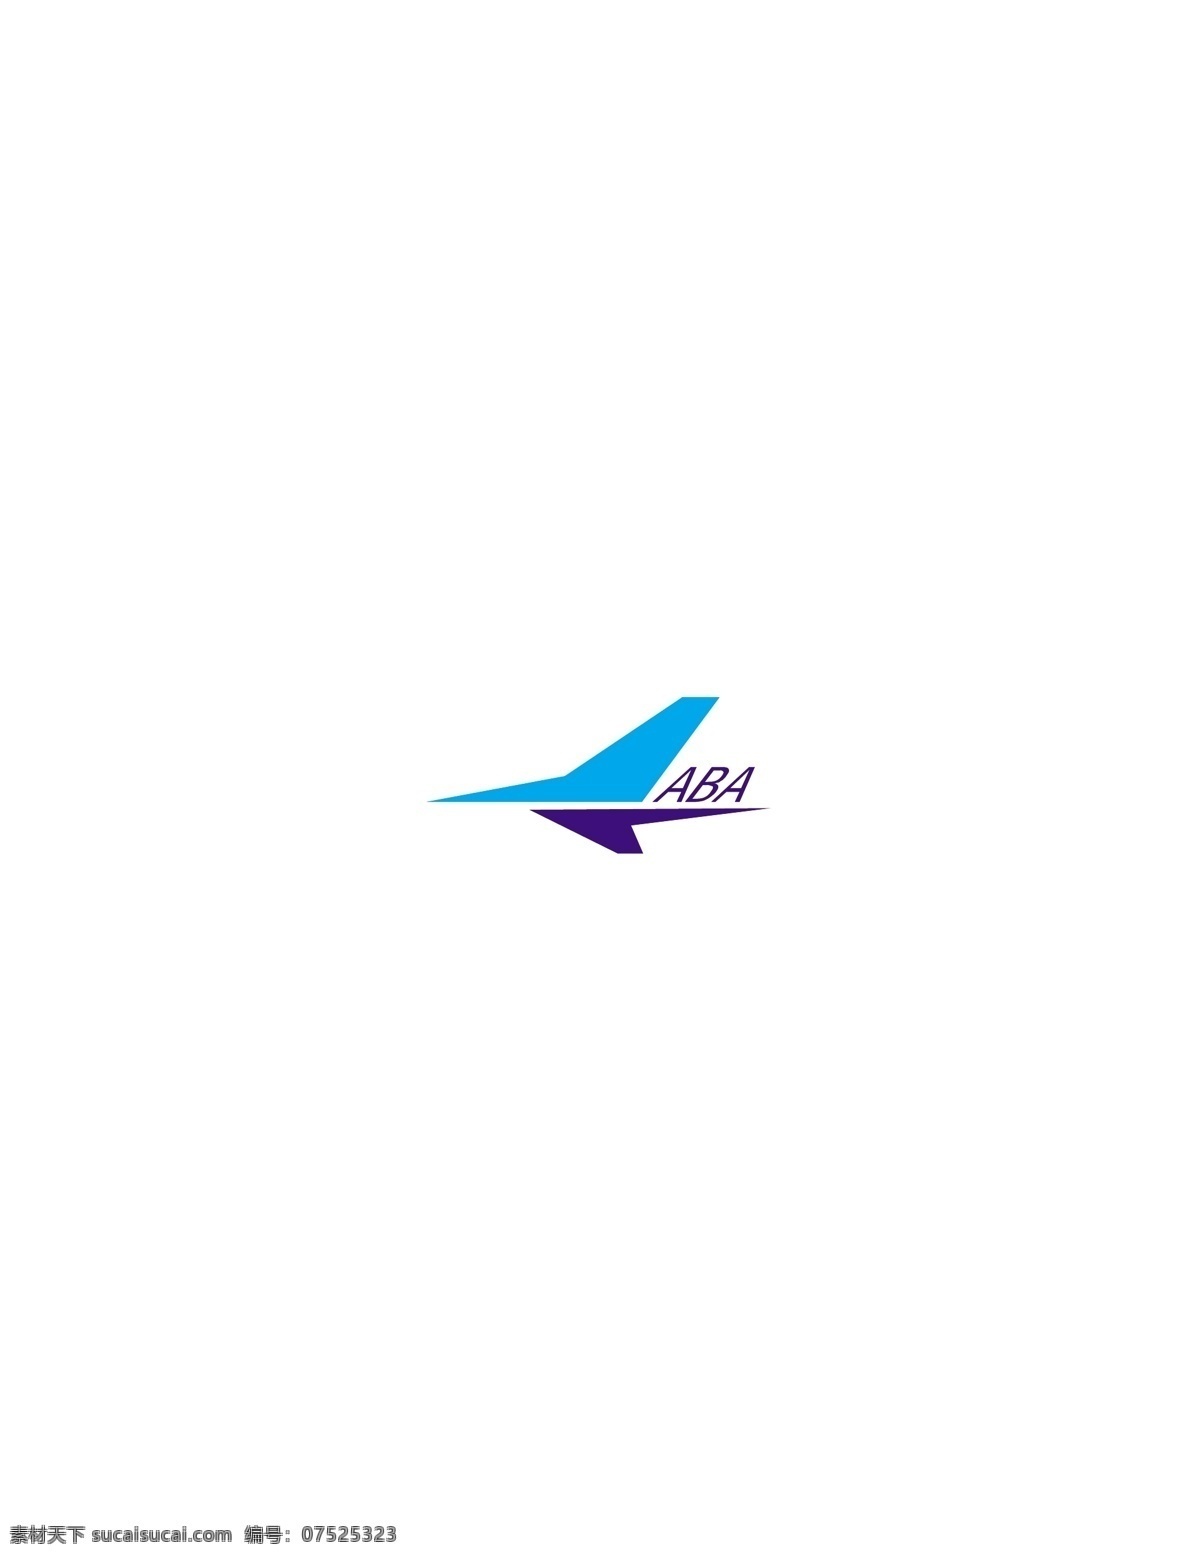 aba1 logo大全 logo 设计欣赏 商业矢量 矢量下载 航空公司 标志 标志设计 欣赏 网页矢量 矢量图 其他矢量图